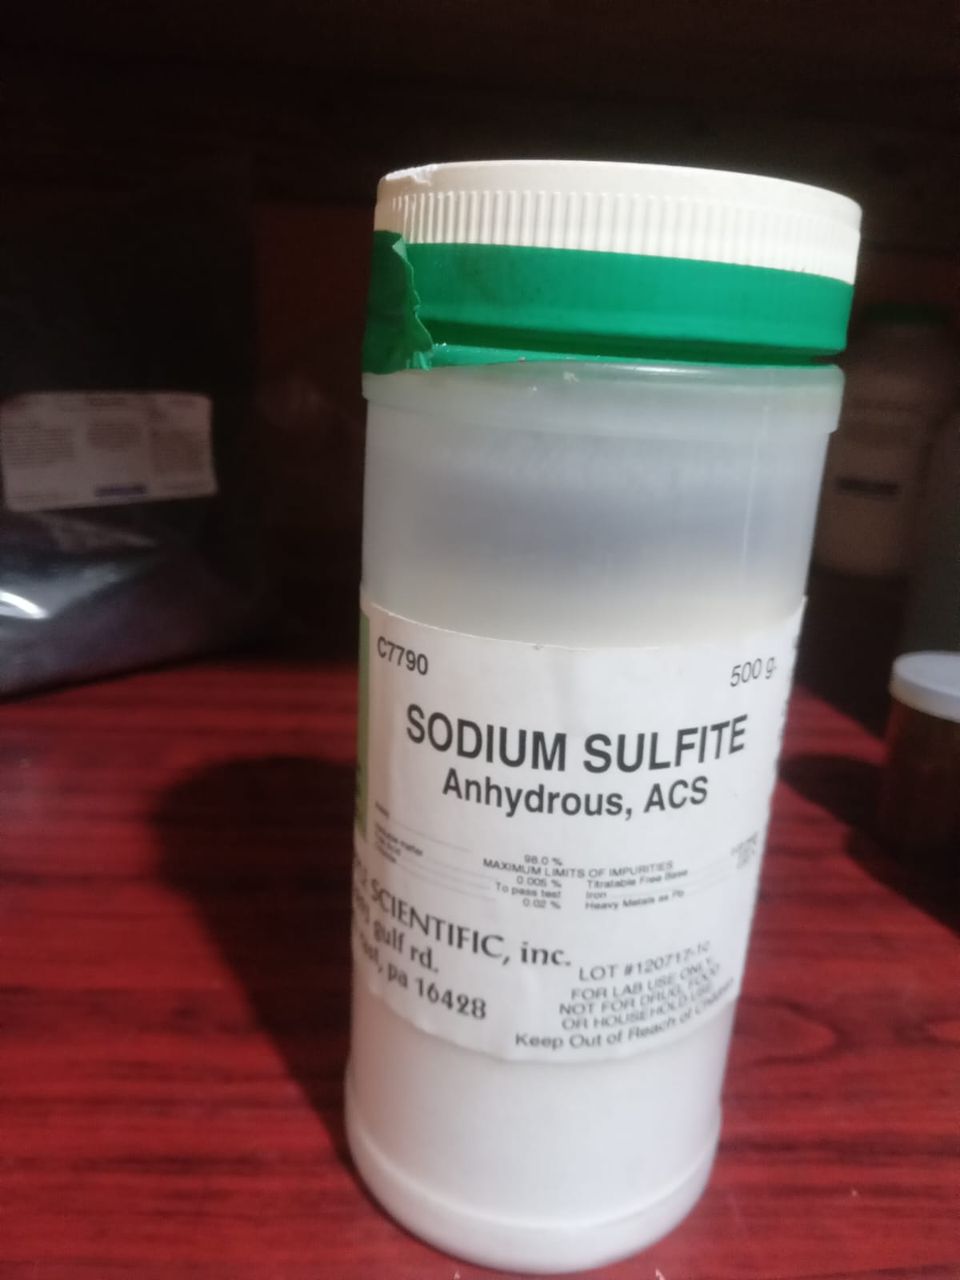 Sodium sulfite anyhydrous